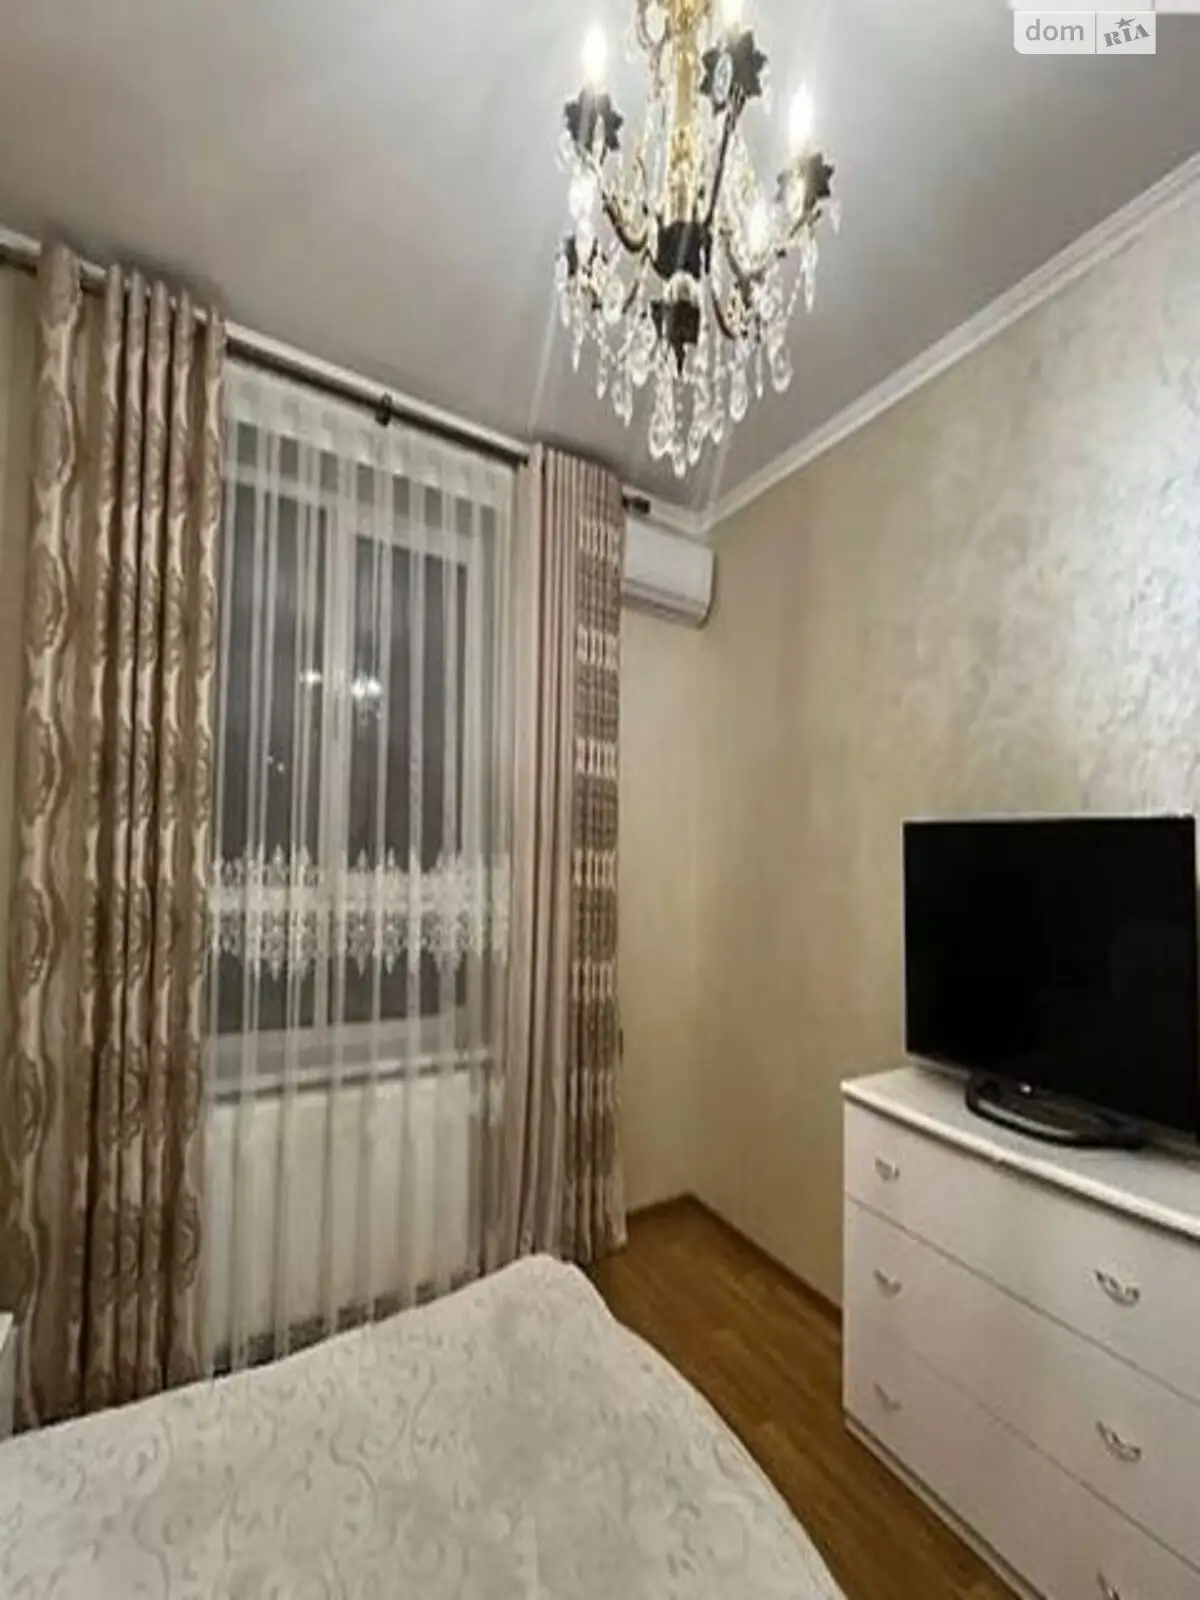 Сдается в аренду 2-комнатная квартира 65 кв. м в Ивано-Франковске - фото 3